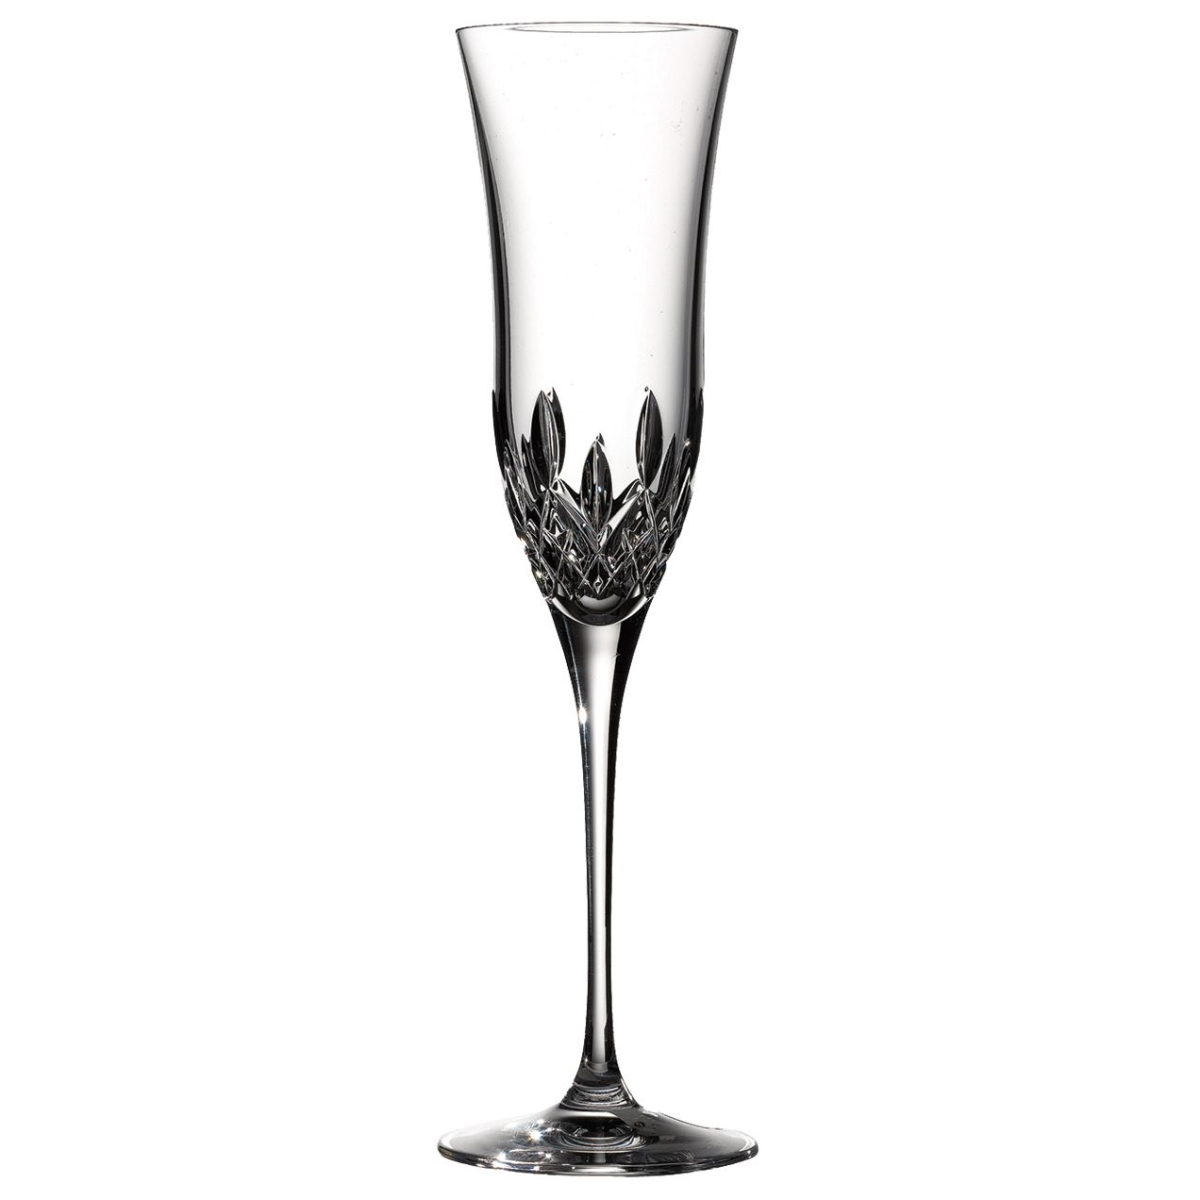 https://www.berings.com/wp-content/uploads/2020/05/Waterford-Lismore-Essence-Champagne-Flute.jpg